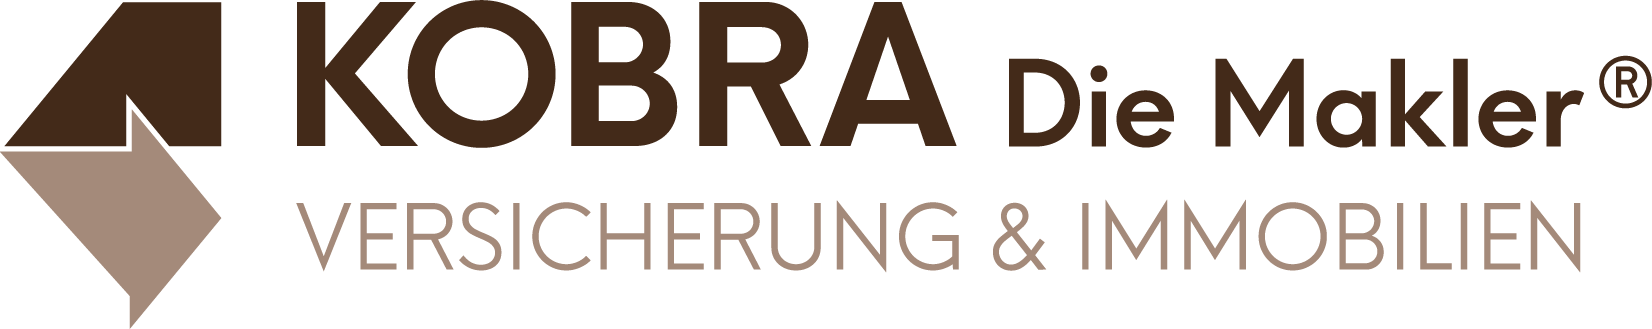 KOBRA Die Makler Logo